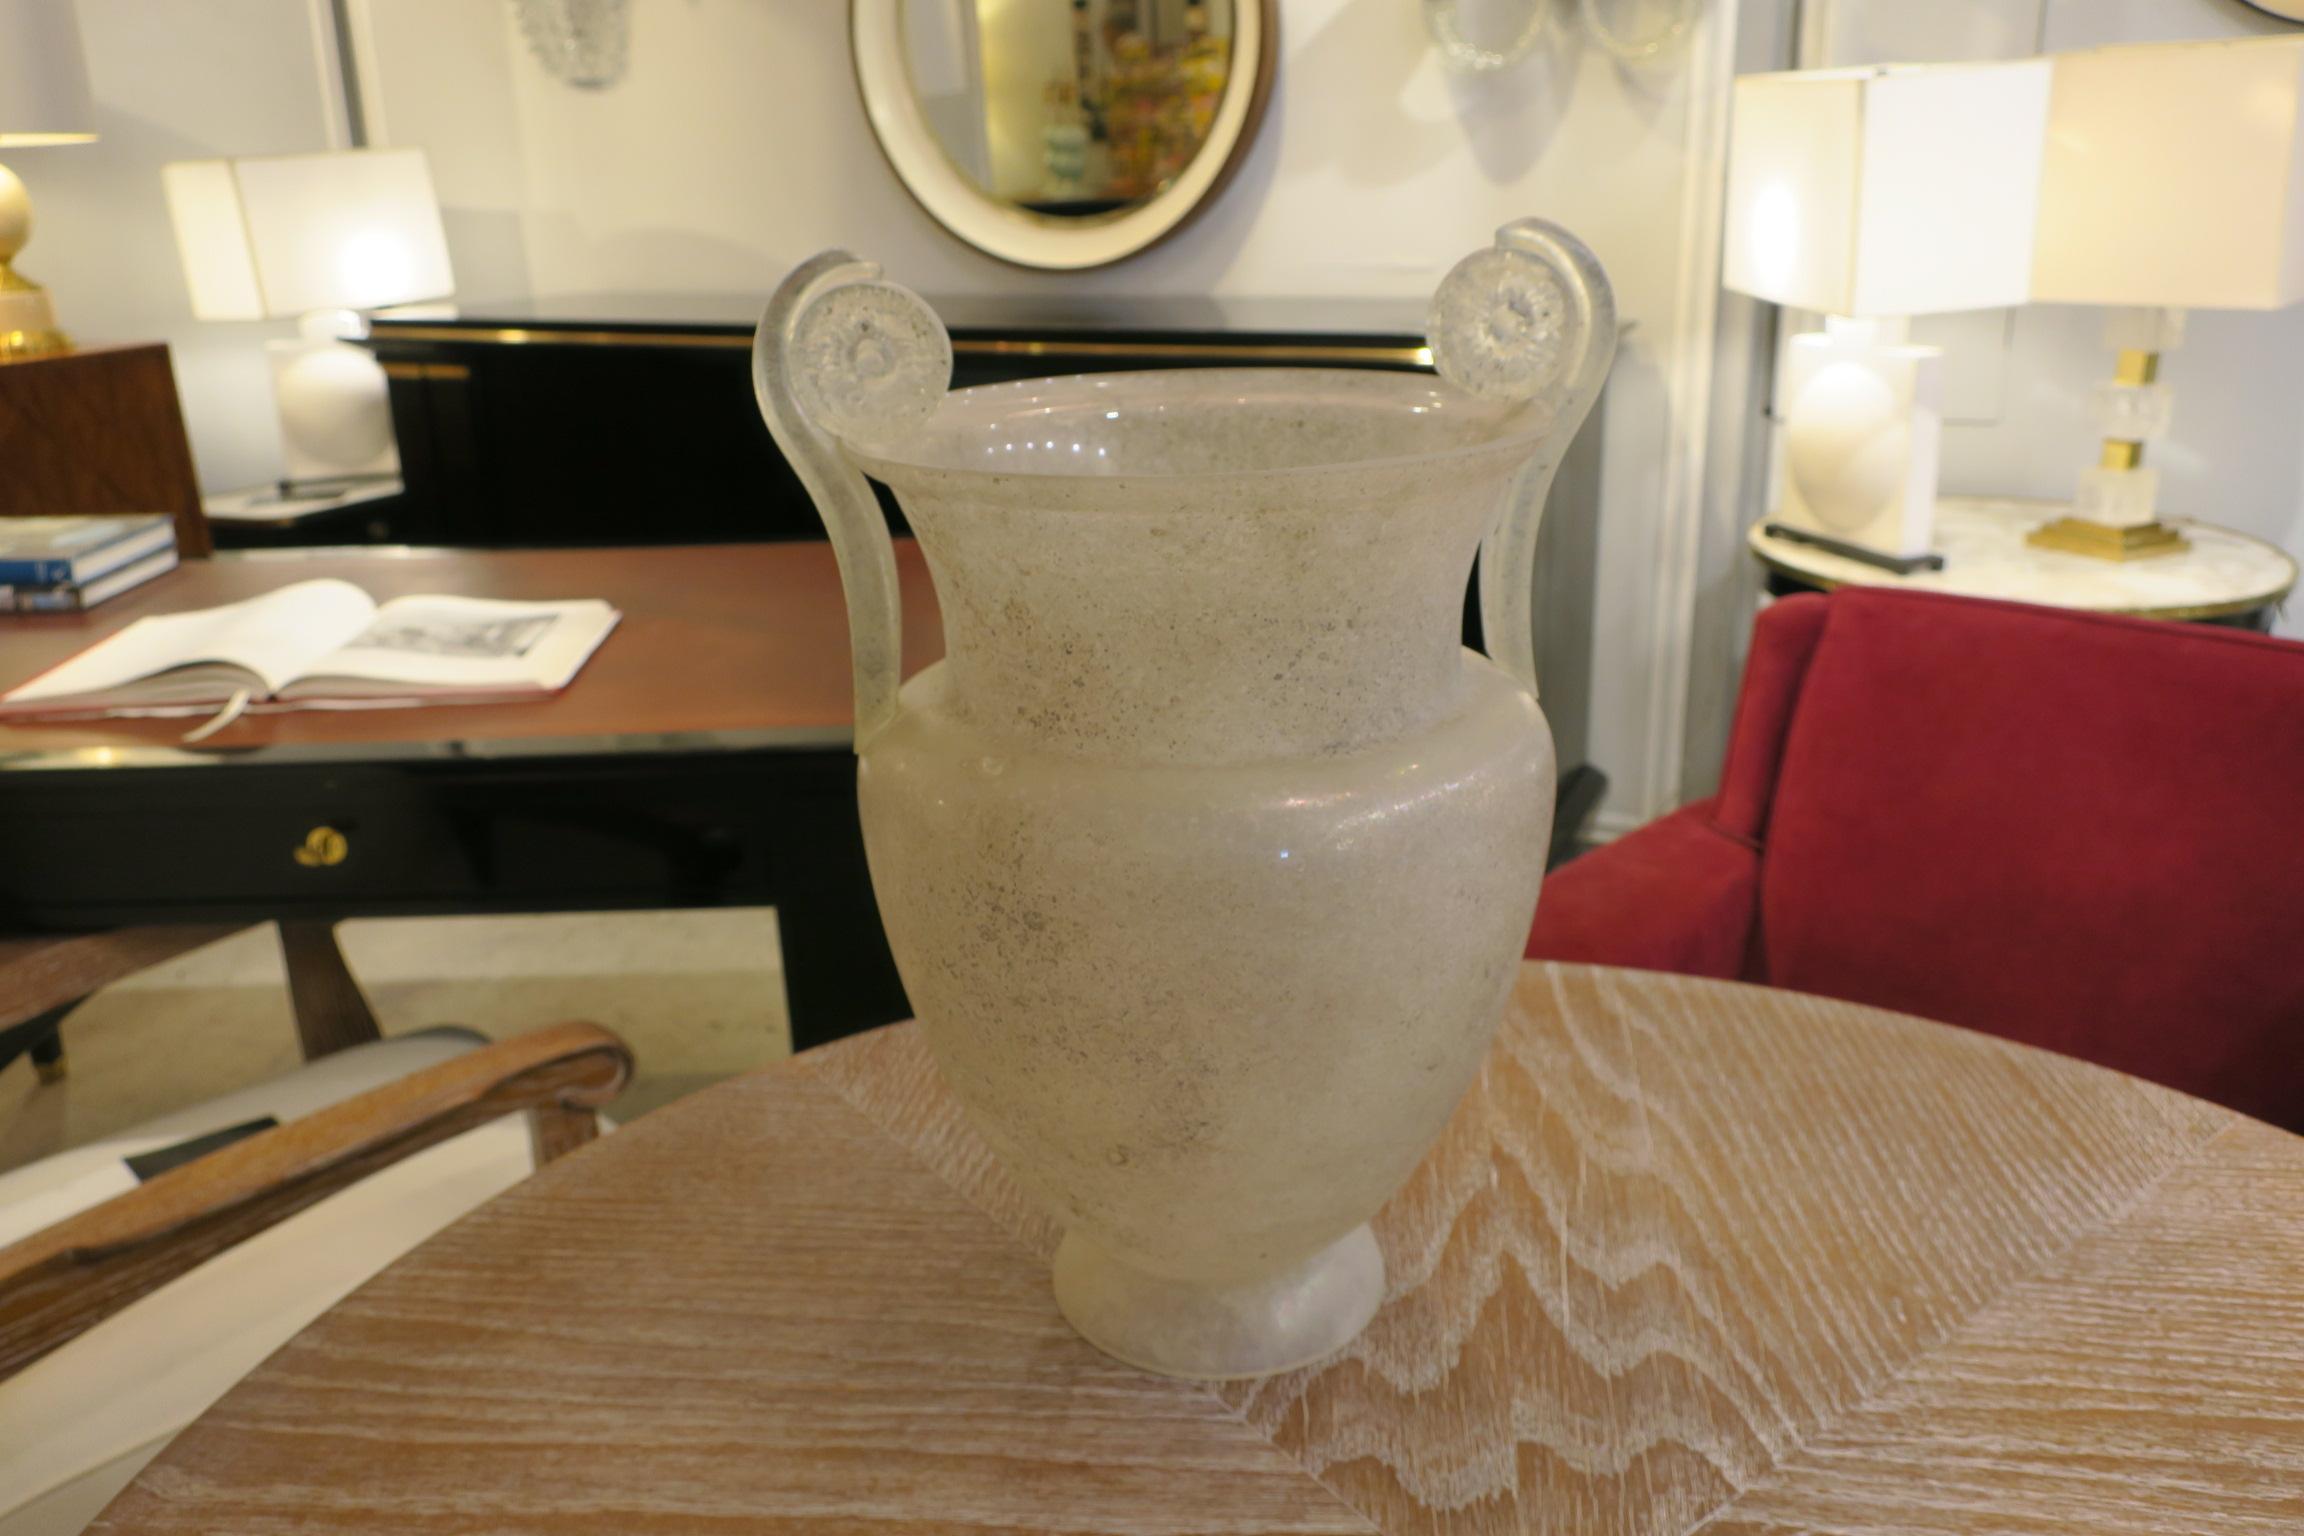 Pair of handblown glass urns.